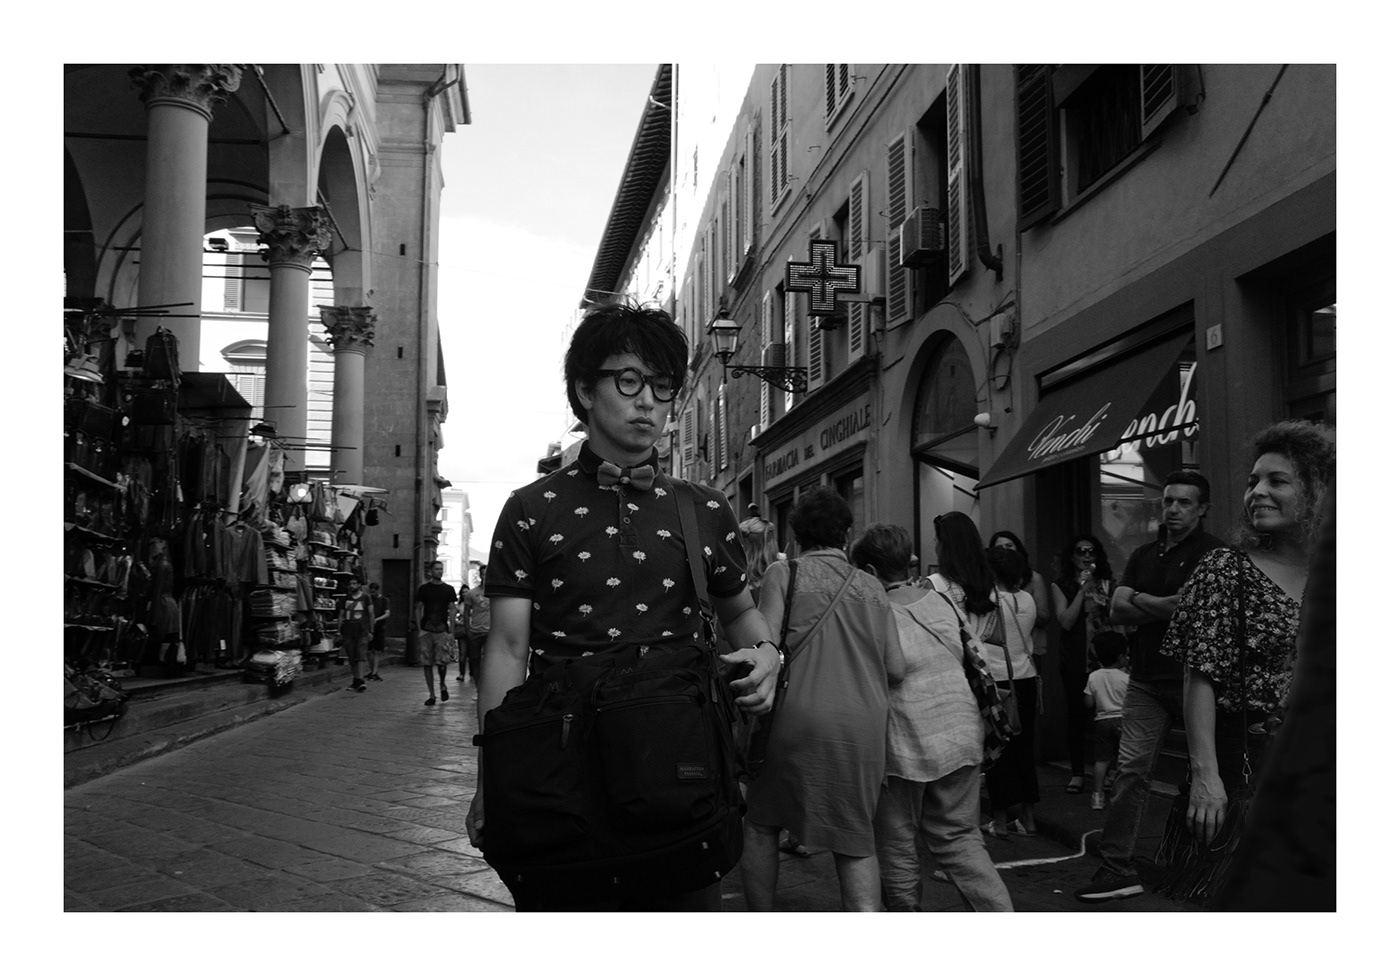 Street street photography black and white monochrome Urban people city Travel